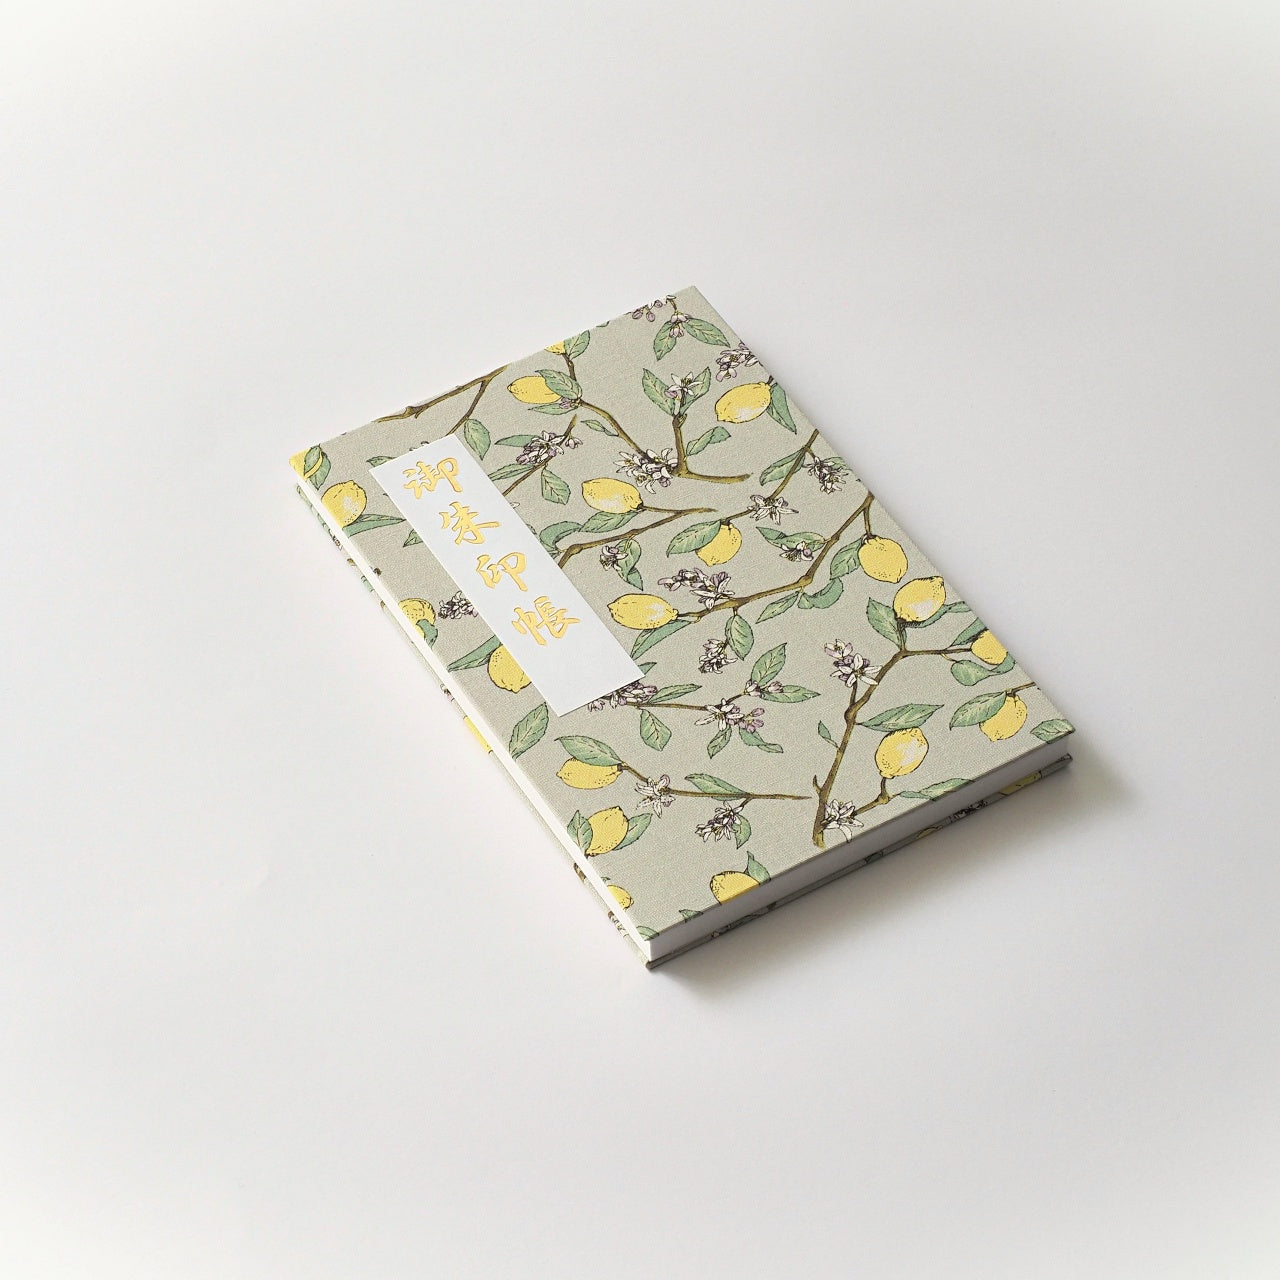 Goshuin book “Kiyora” morning cool lemon and fresh greenery